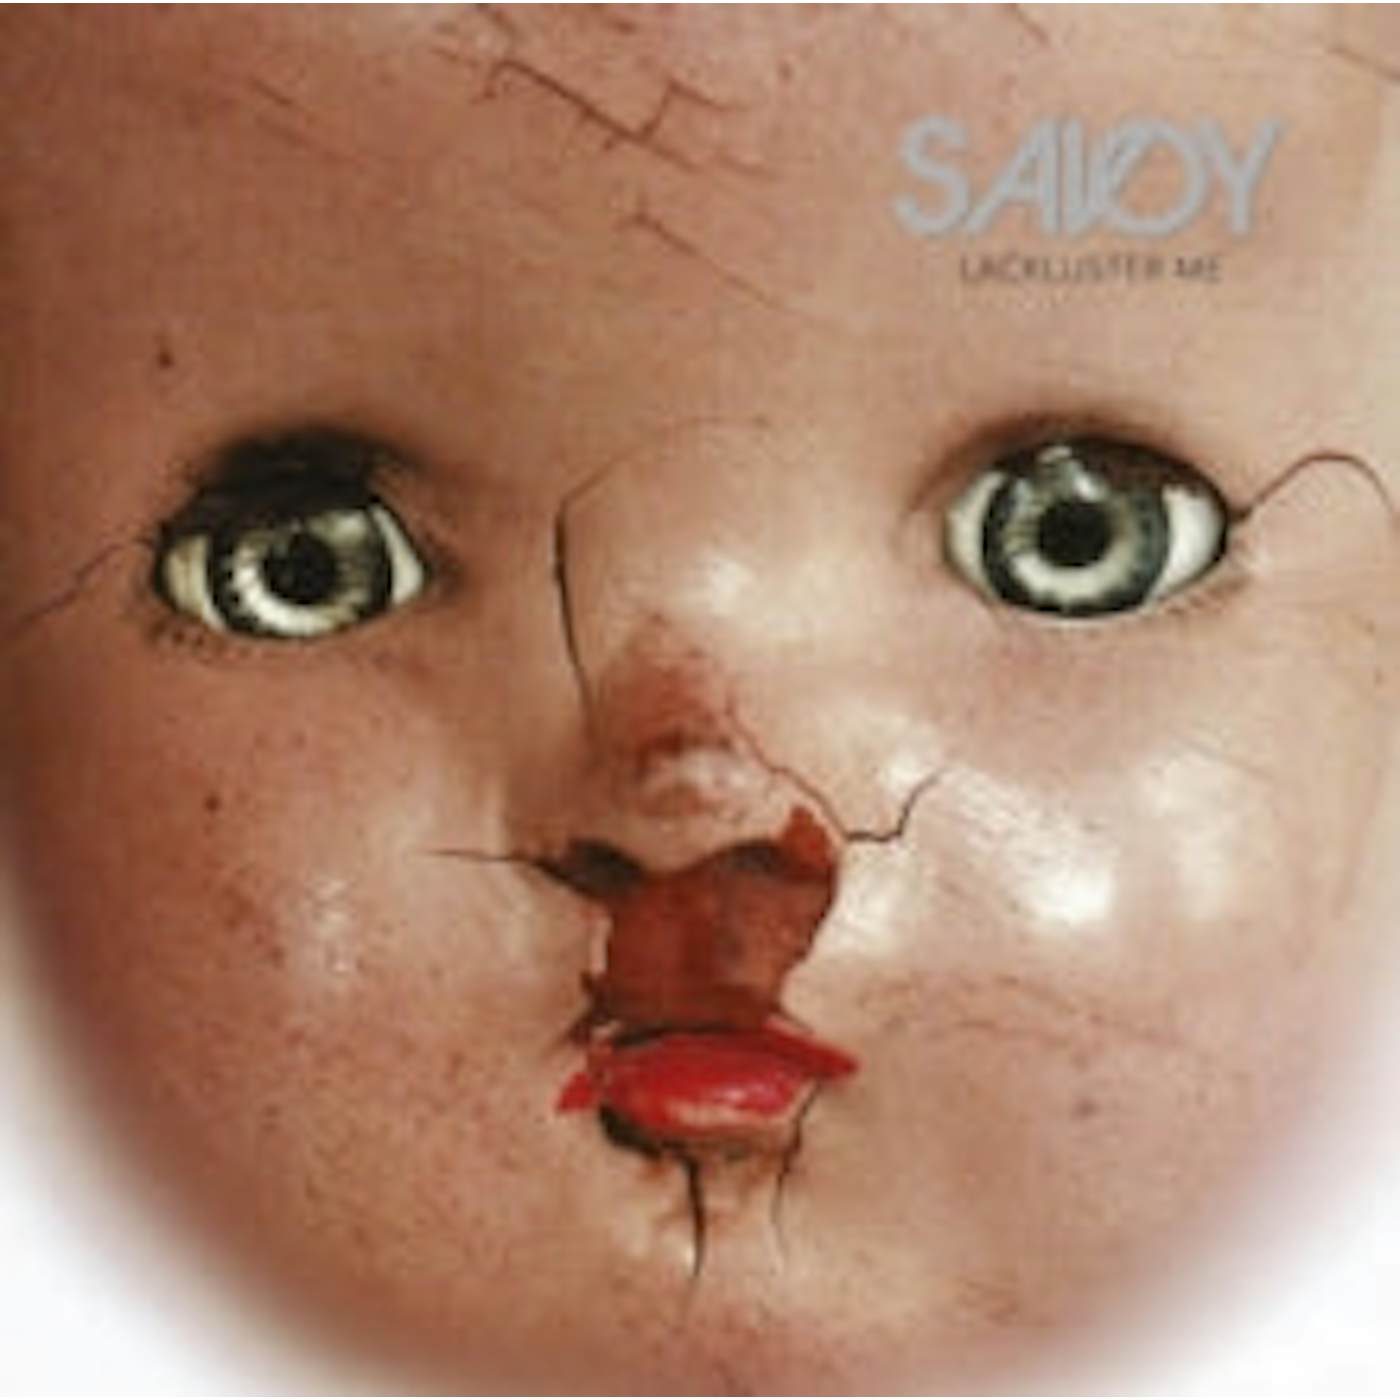 Savoy CD - Lackluster Me